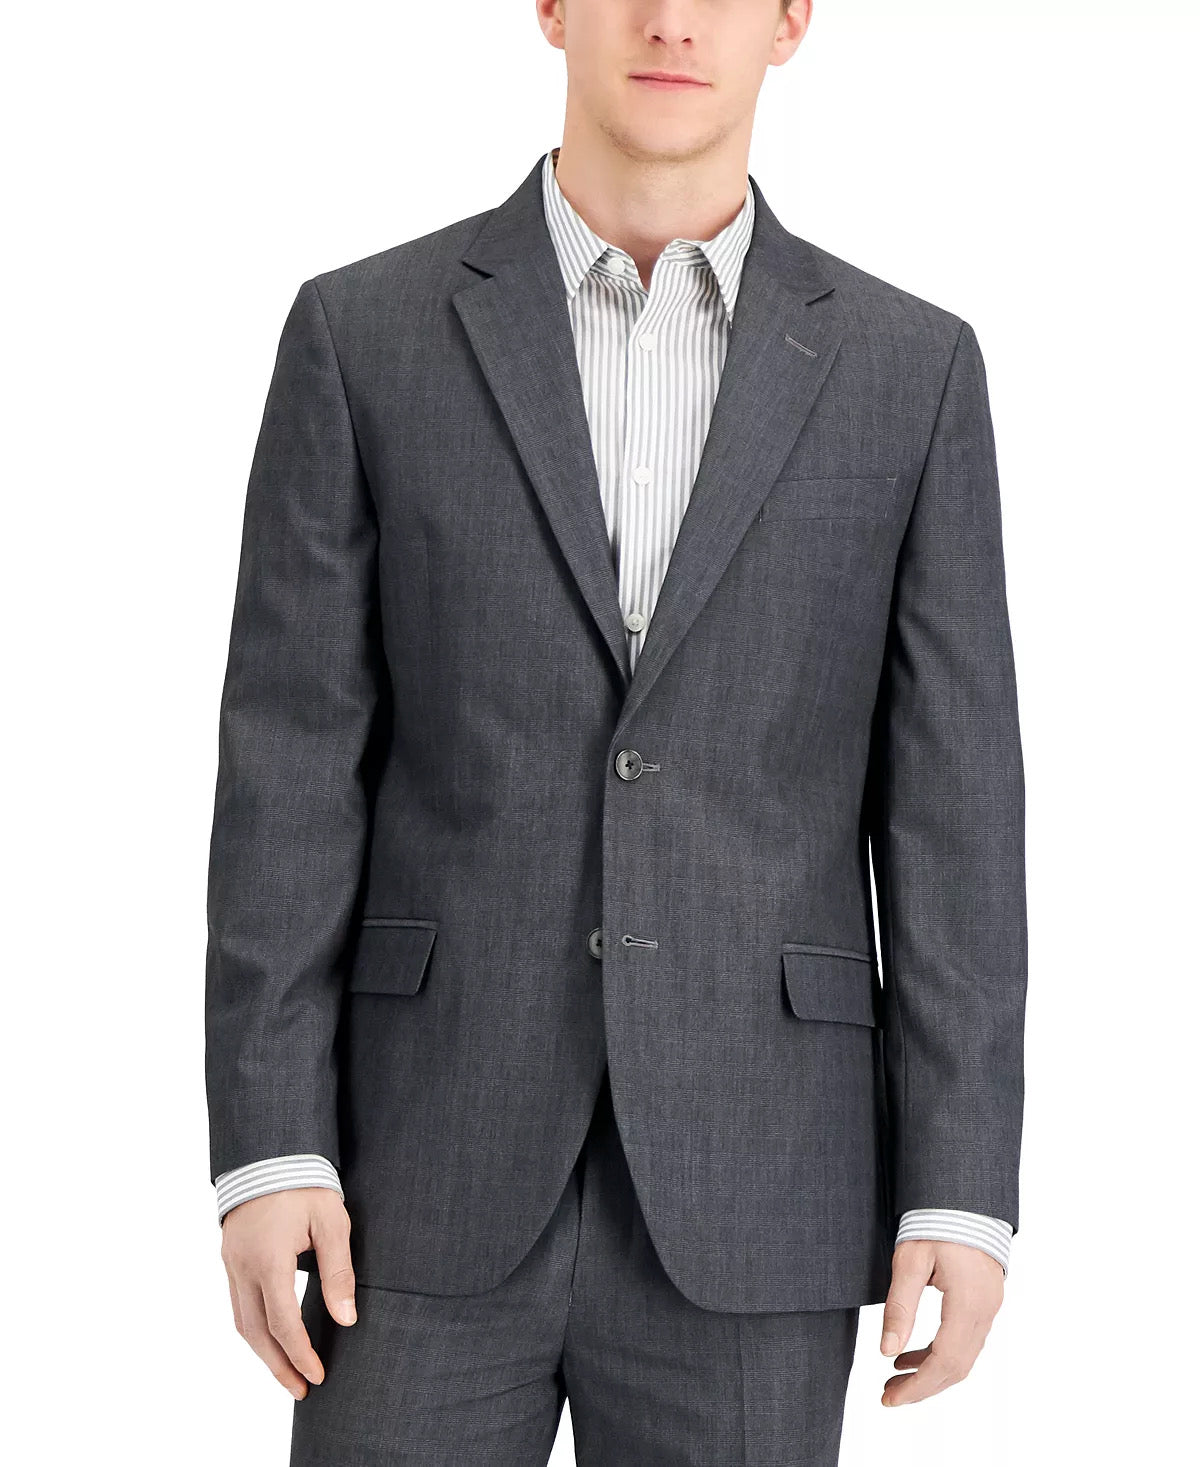 NAUTICA Men's Modern-Fit Bi-Stretch Suit Jacket Charcoal Plaid 40S JACKET ONLY